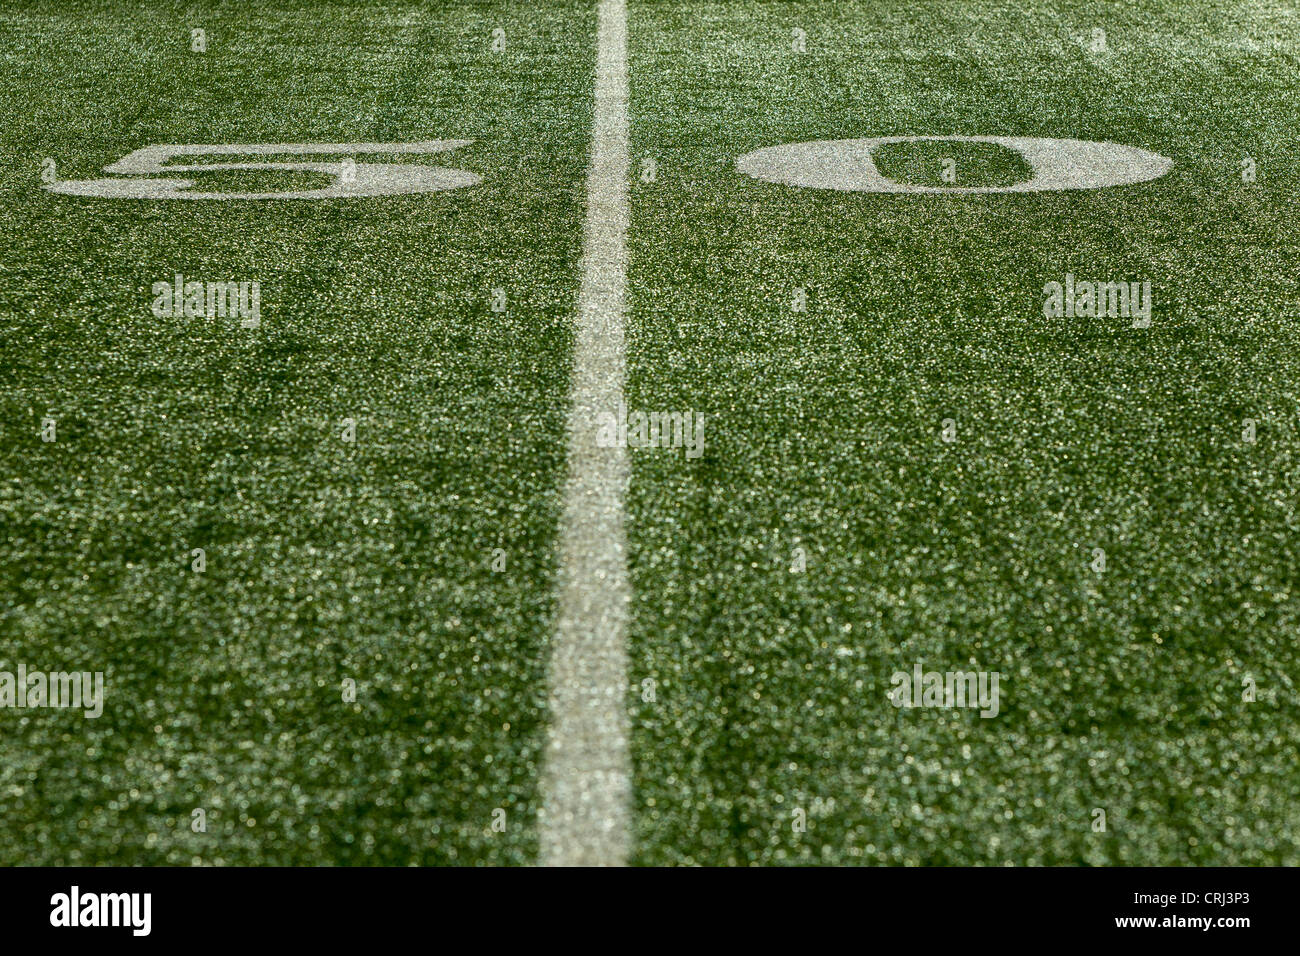 50-Yard-Linie Marker im American Football-Stadion. Stockfoto